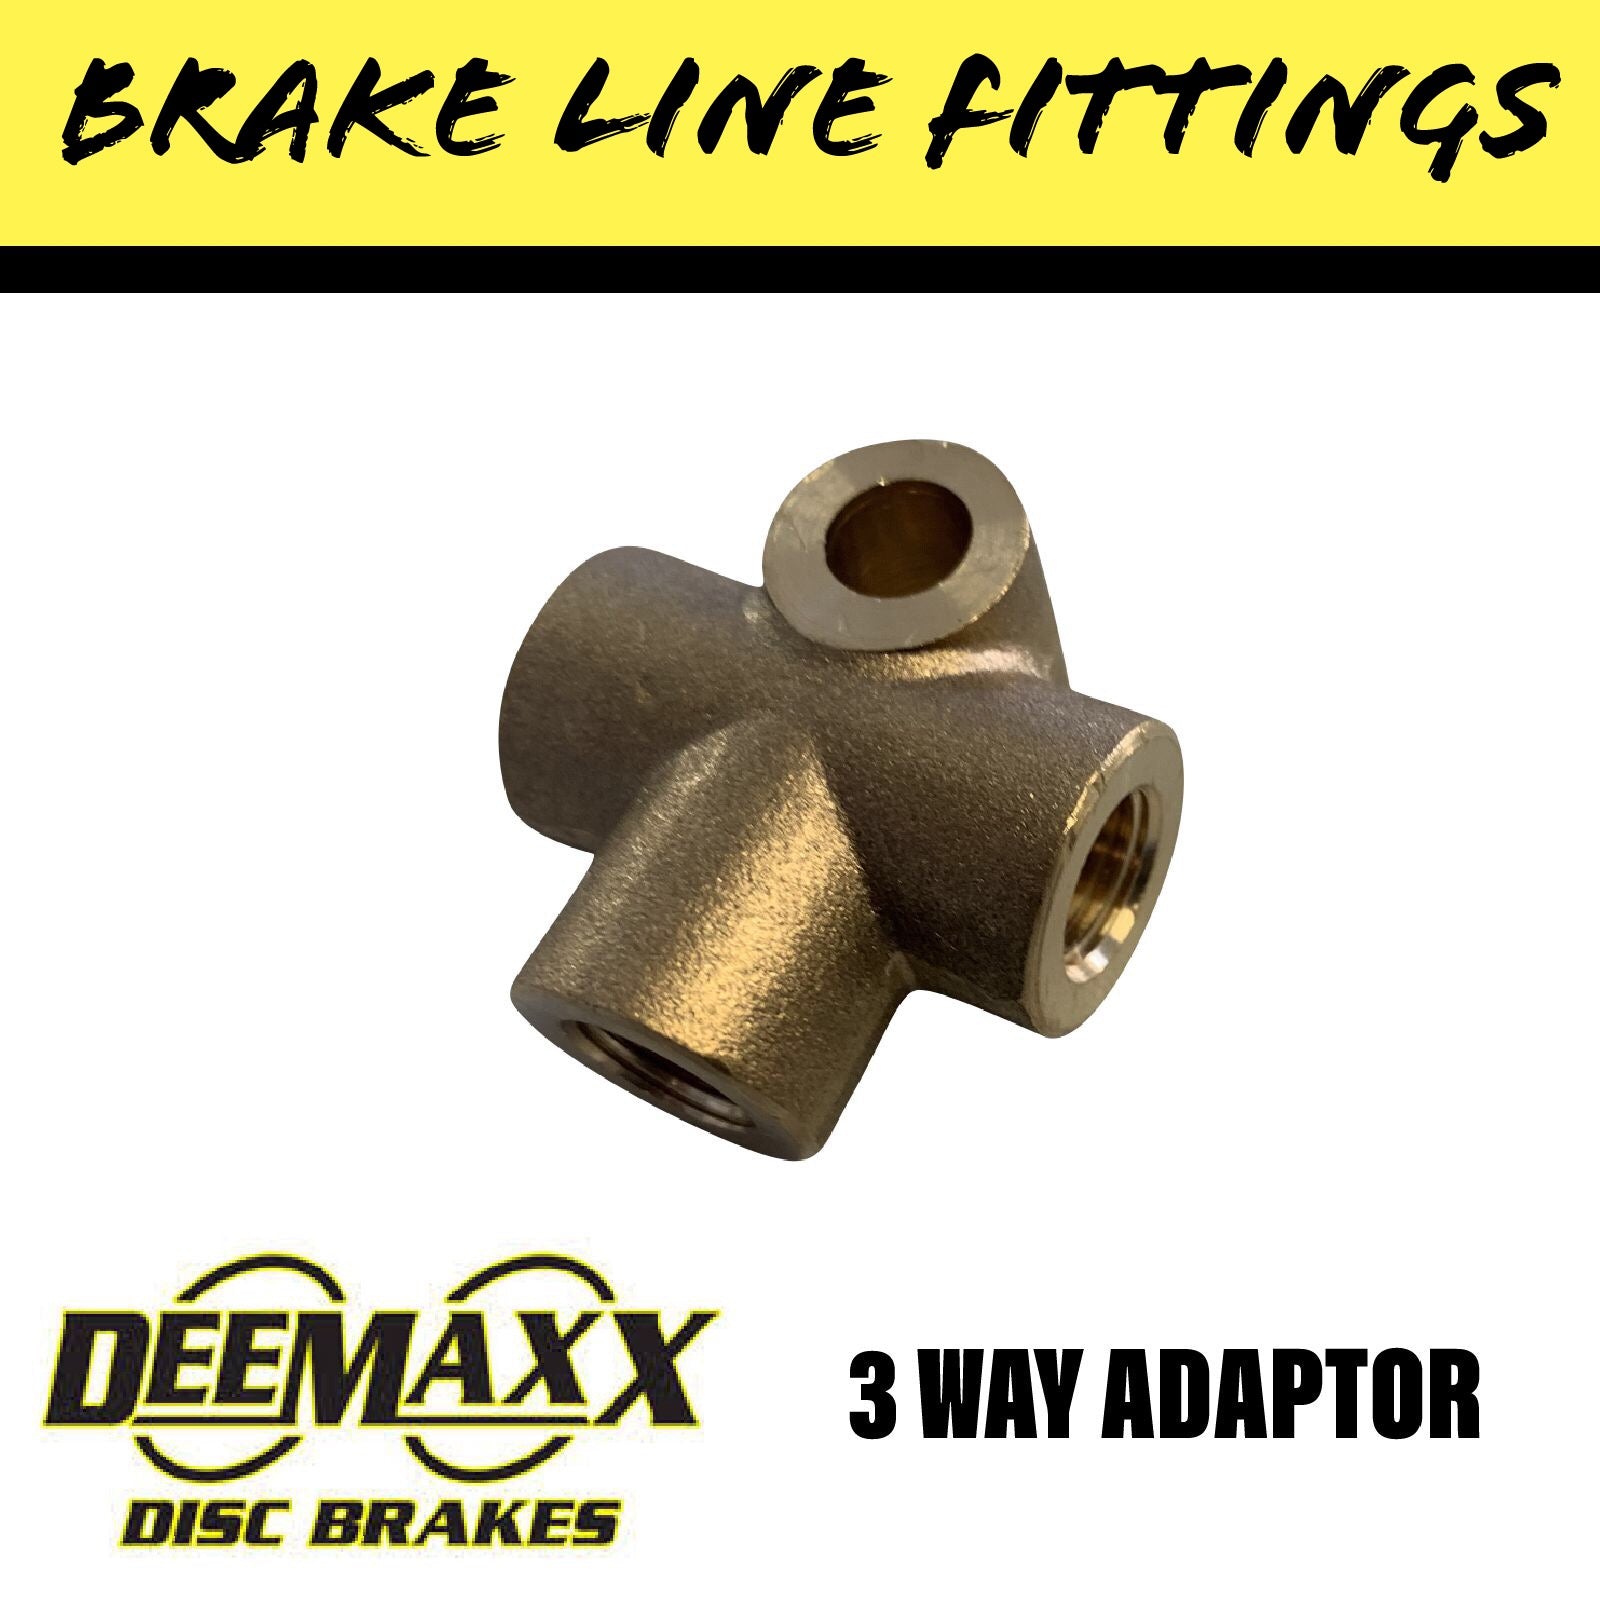 3 WAY BRASS Brake Line Adaptor